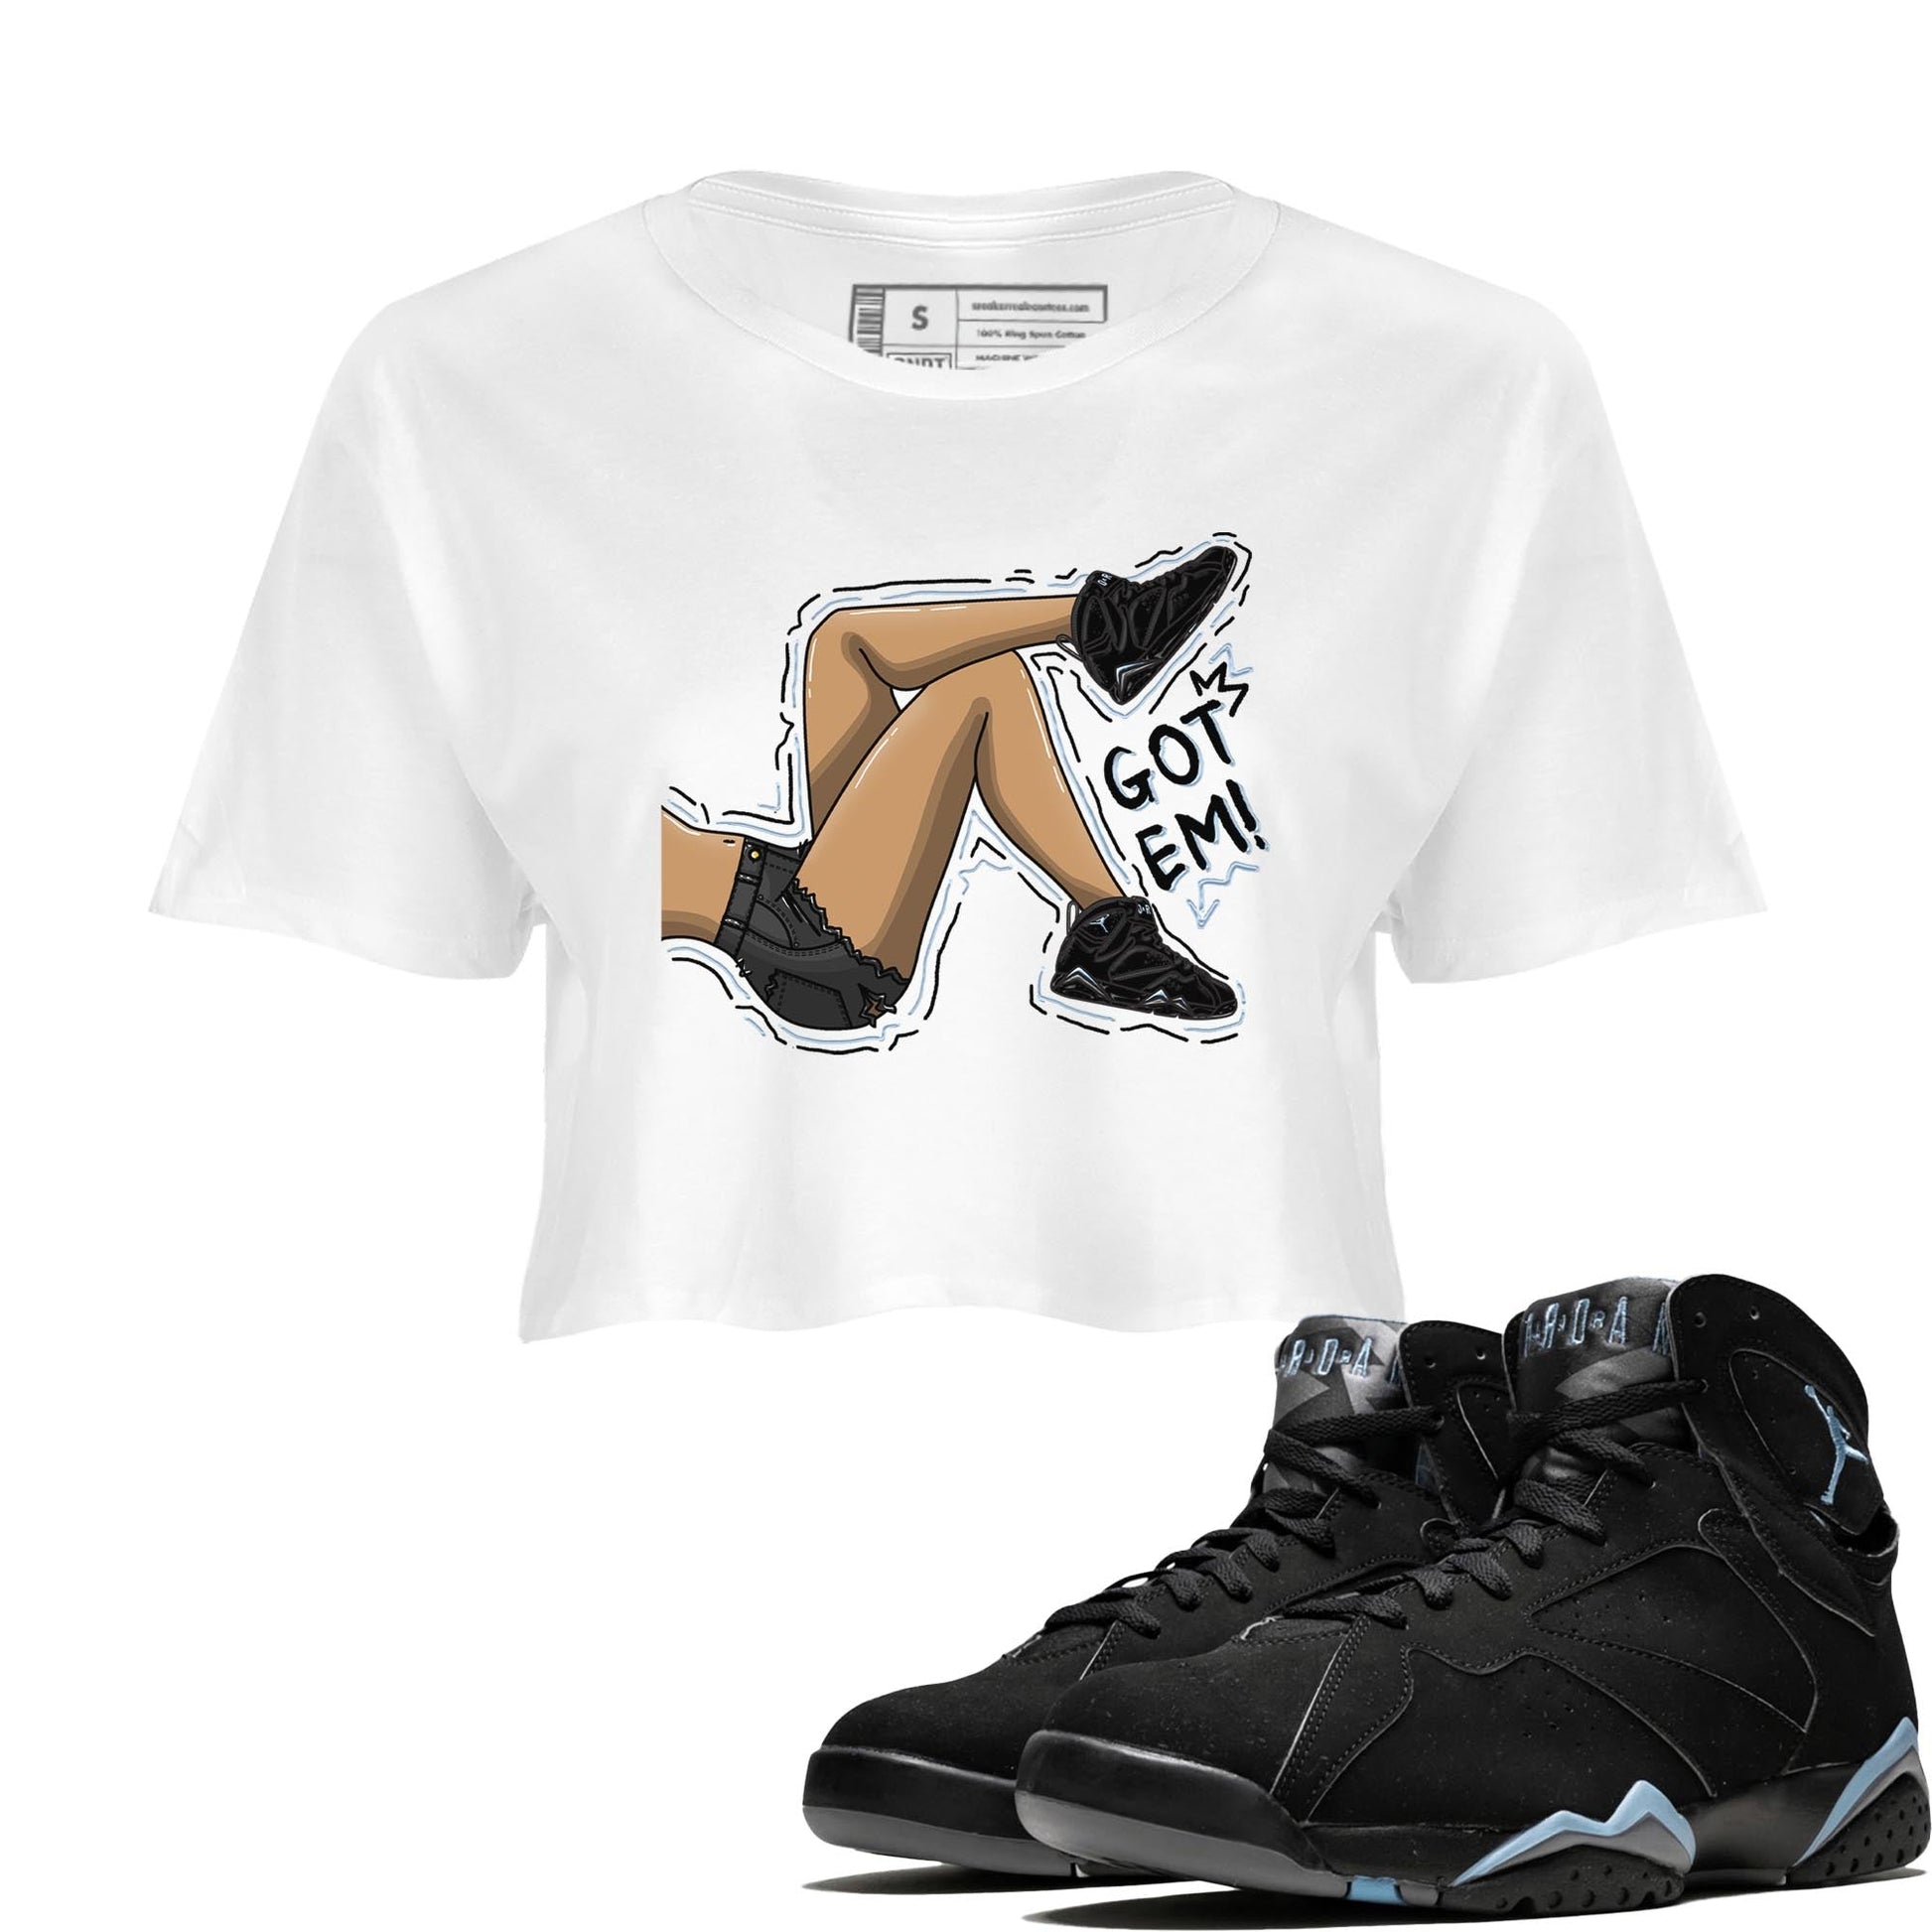 Air Jordan 7 Chambray shirt to match jordans Got Em Legs Streetwear Sneaker Shirt AJ7 Chambray Drip Gear Zone Sneaker Matching Clothing White 1 Crop T-Shirt